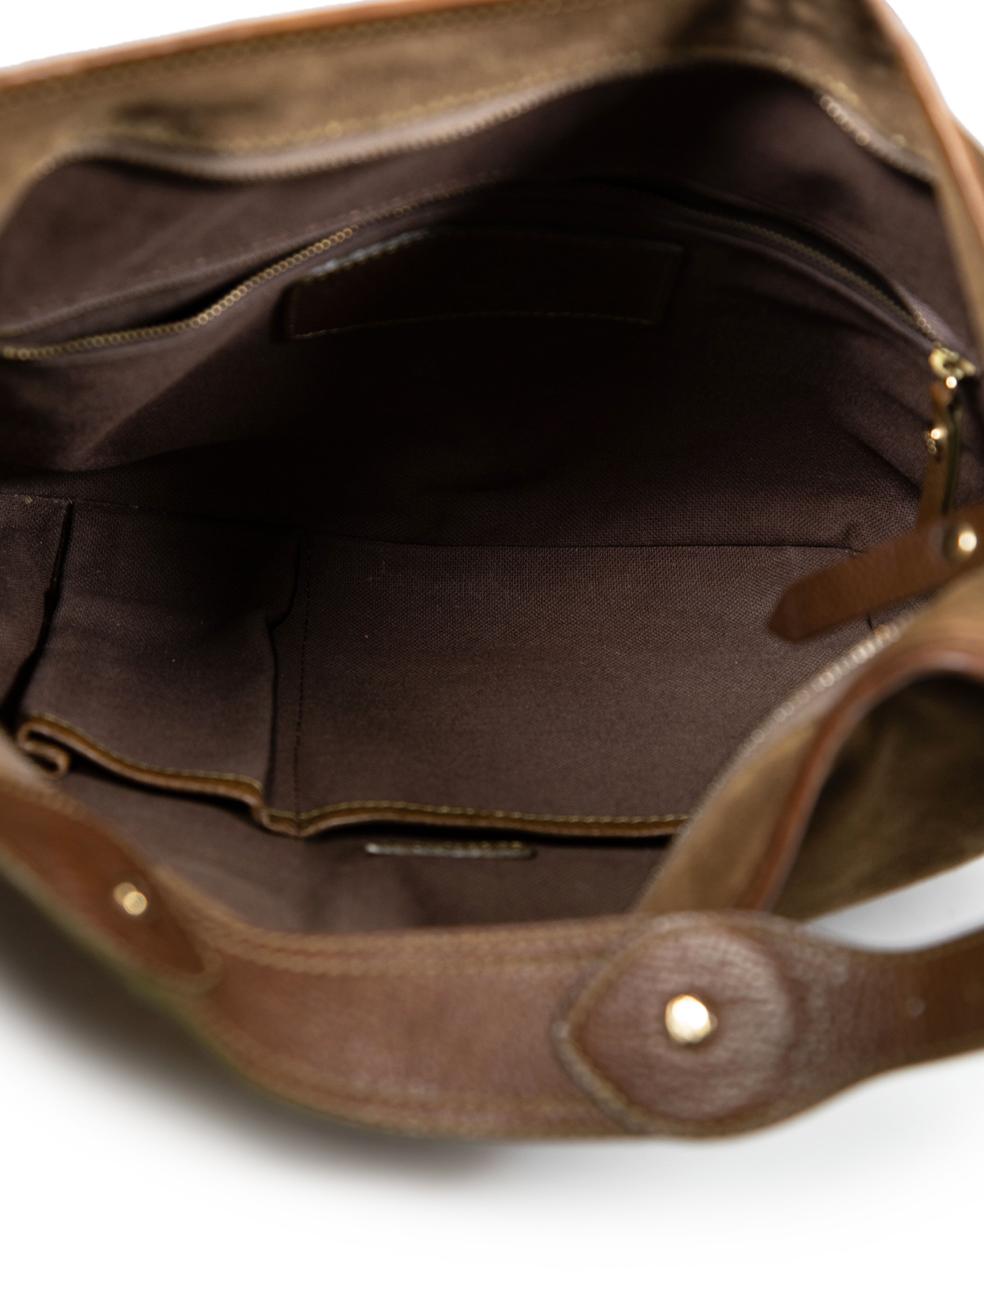 Burberry Khaki Suede Hobo Shoulder Bag For Sale 1